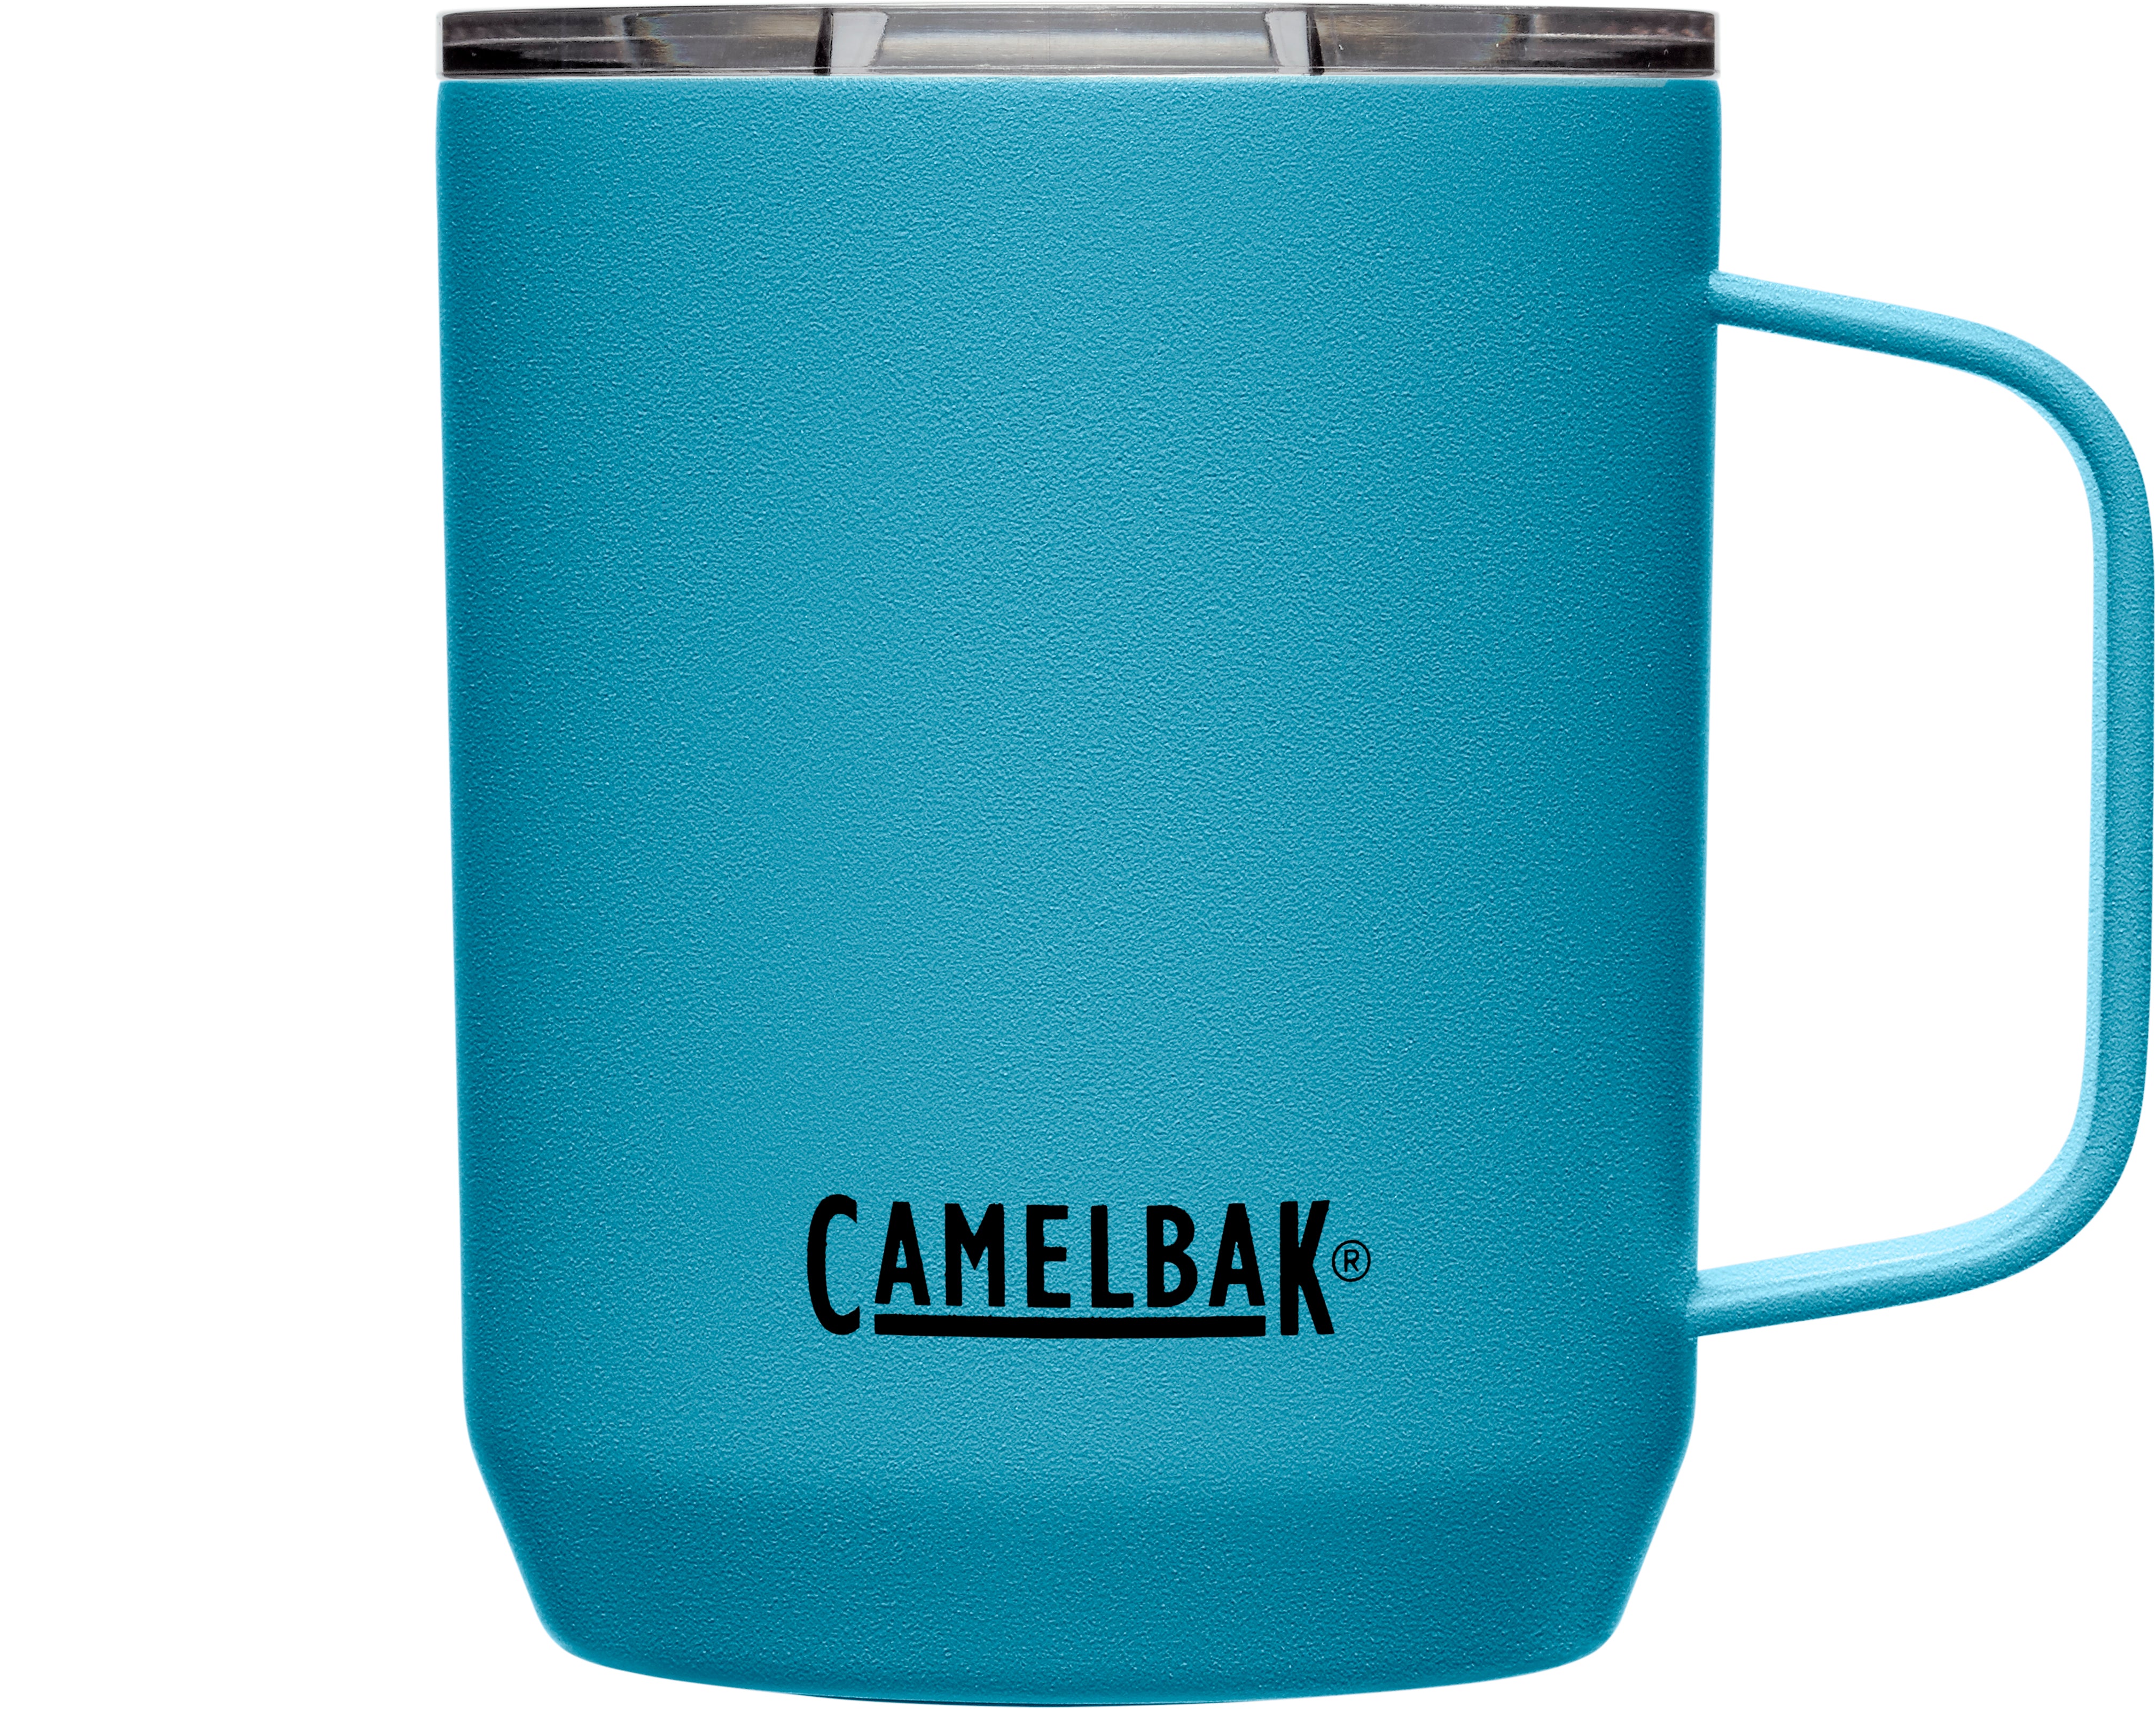 Camelbak Travel Mug